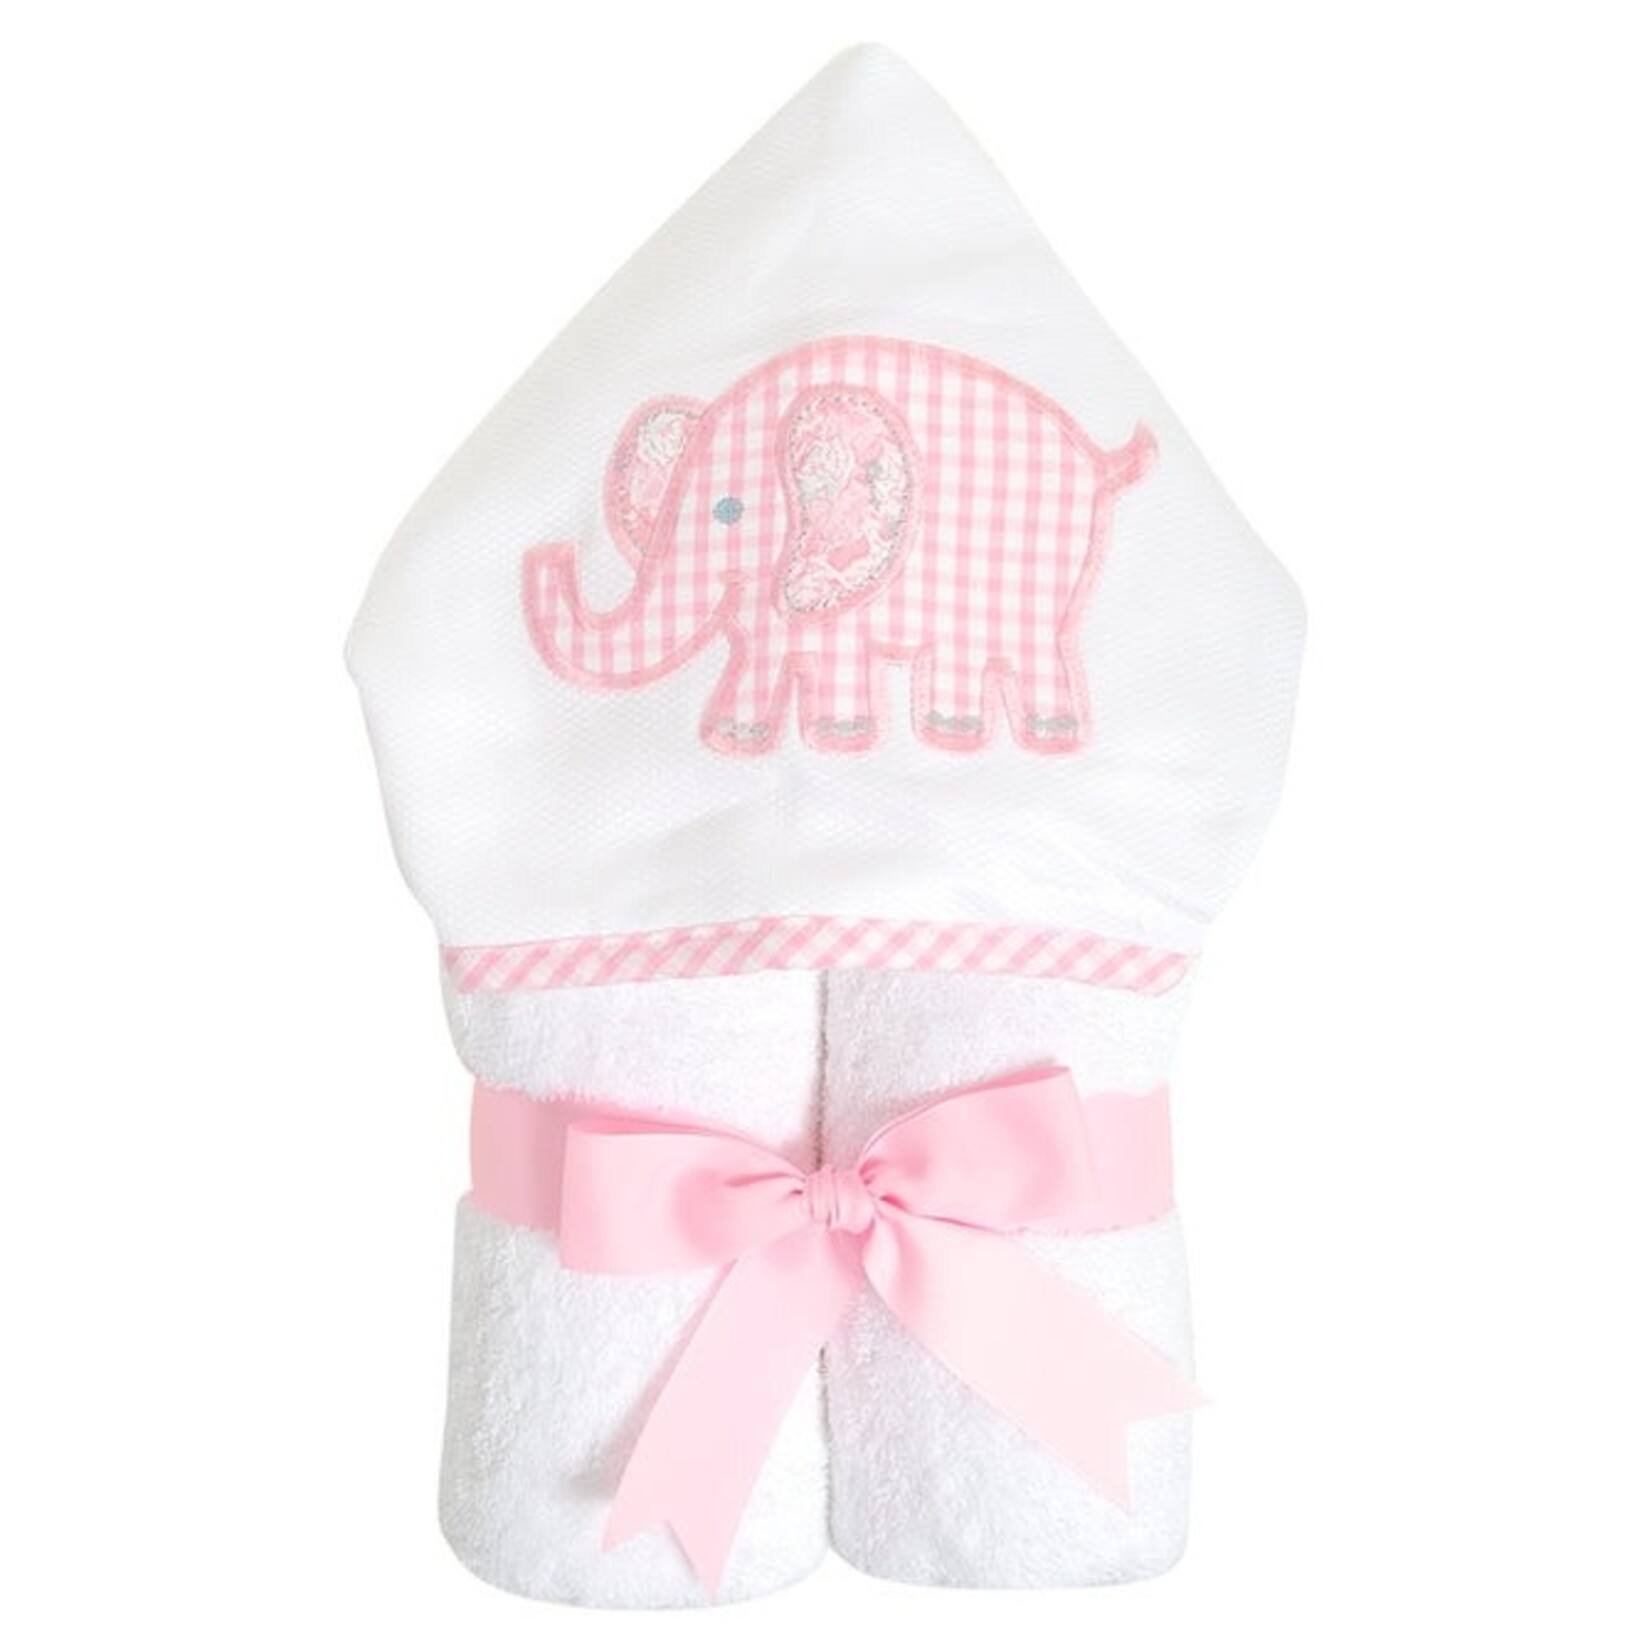 3 Marthas 3 Marthas Hooded Towel - Pink Elephant